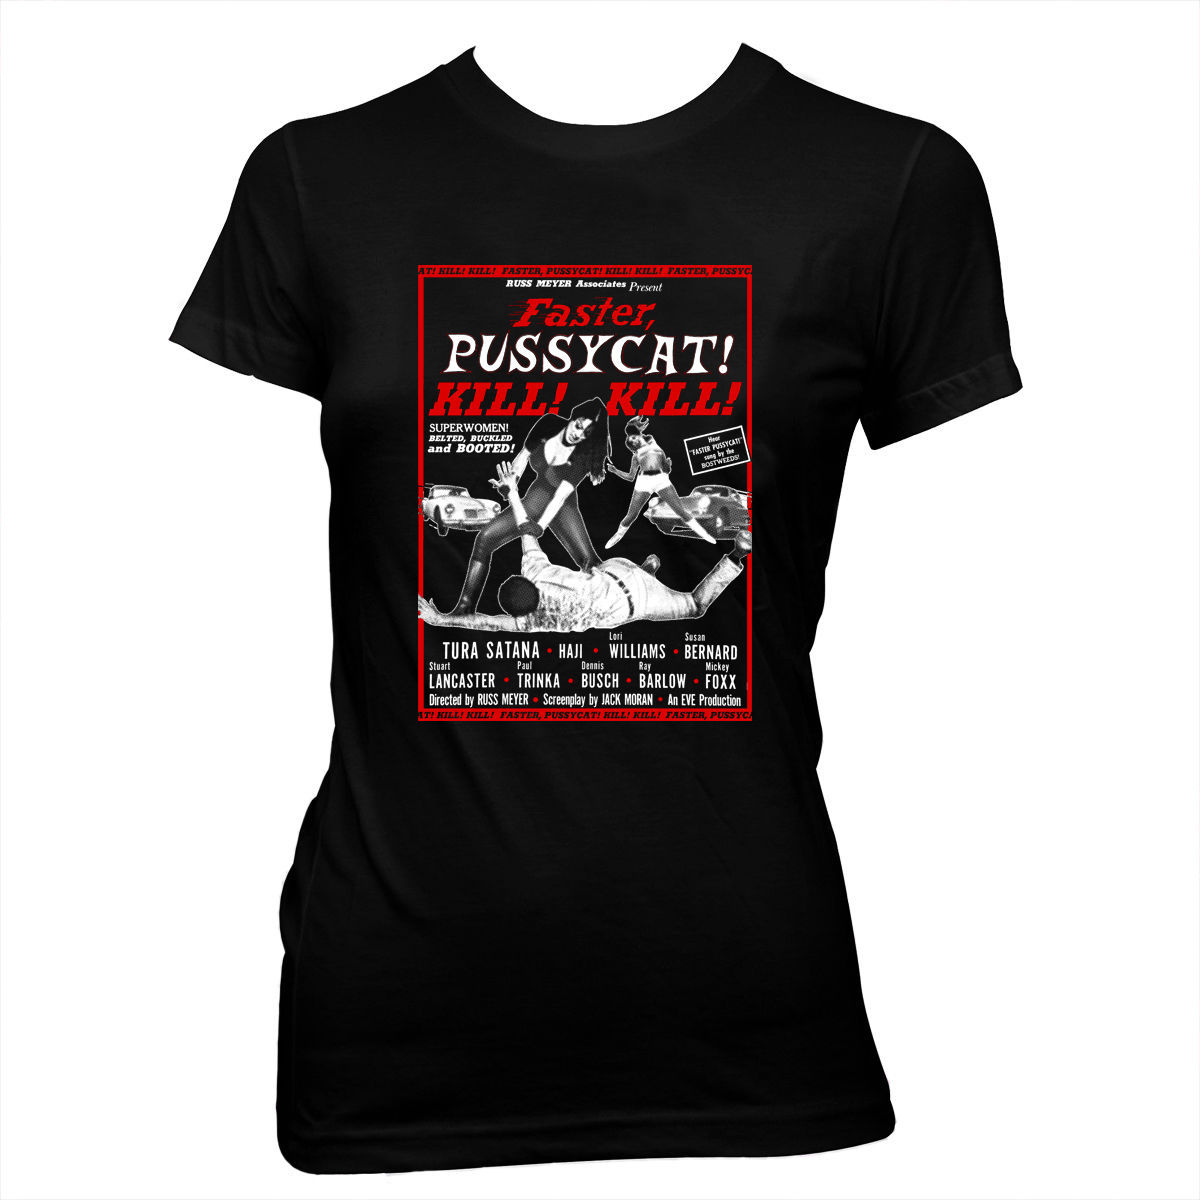 Faster, Pussycat! Kill! Kill! -poster - Women's Pre-shrunk 100% cotton tee-shirt